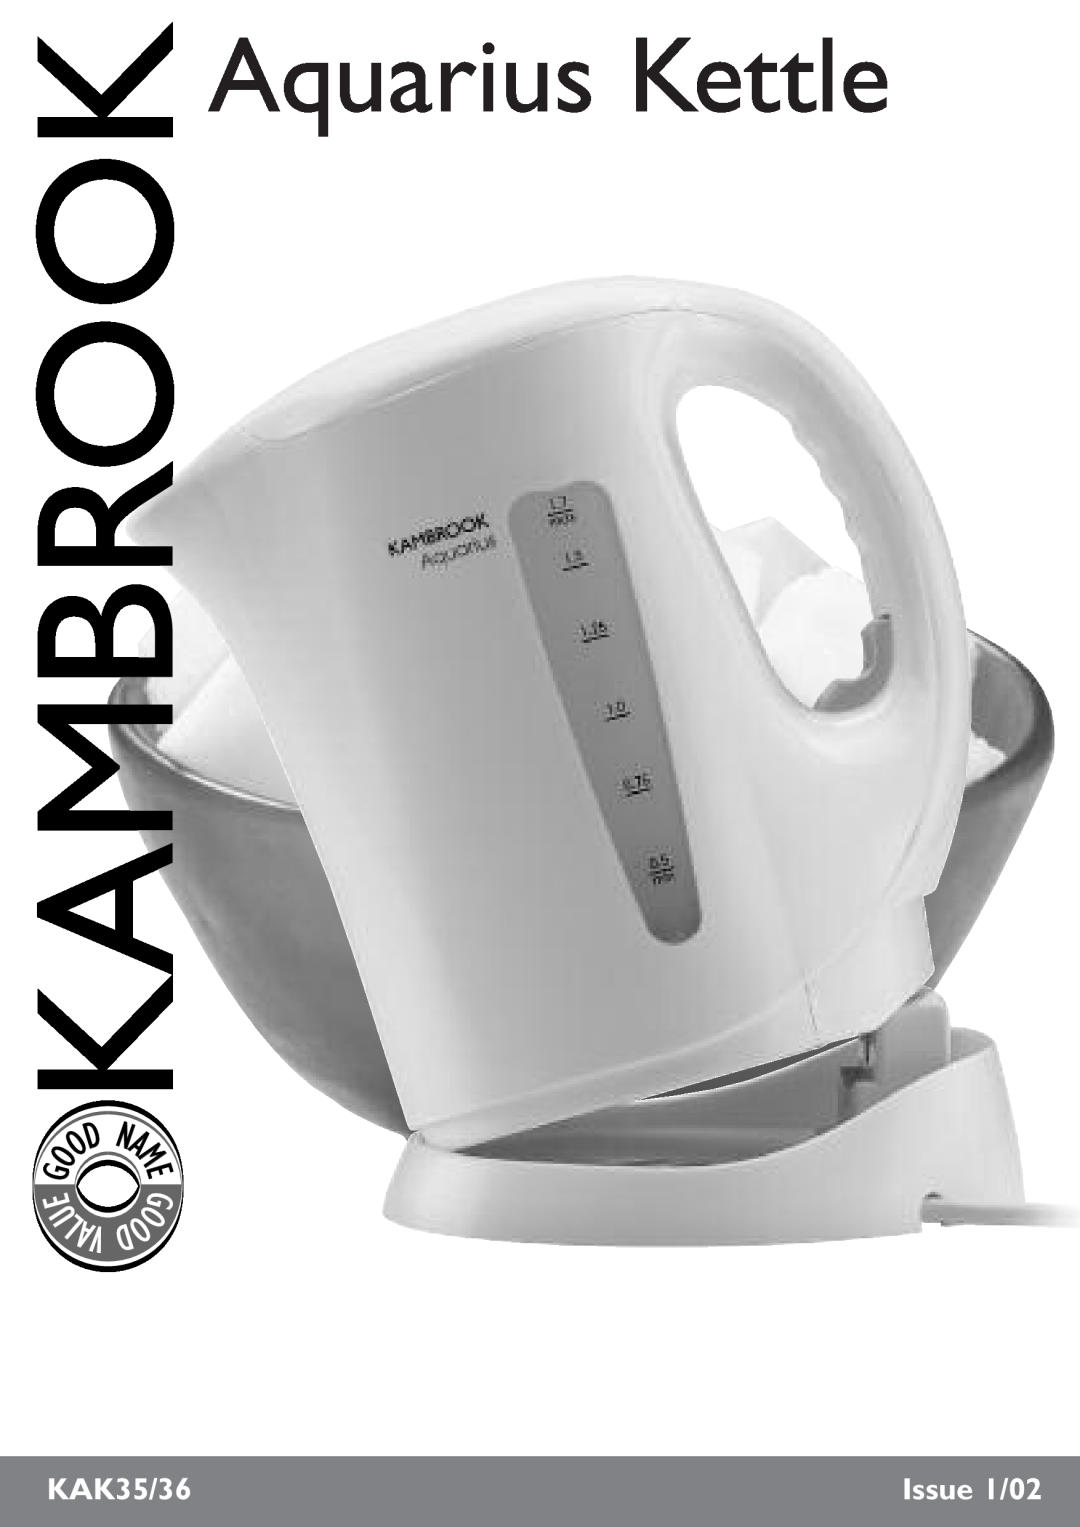 Kambrook KAK36 manual U Lav, Aquarius Kettle, KAK35/36, Issue 1/02 